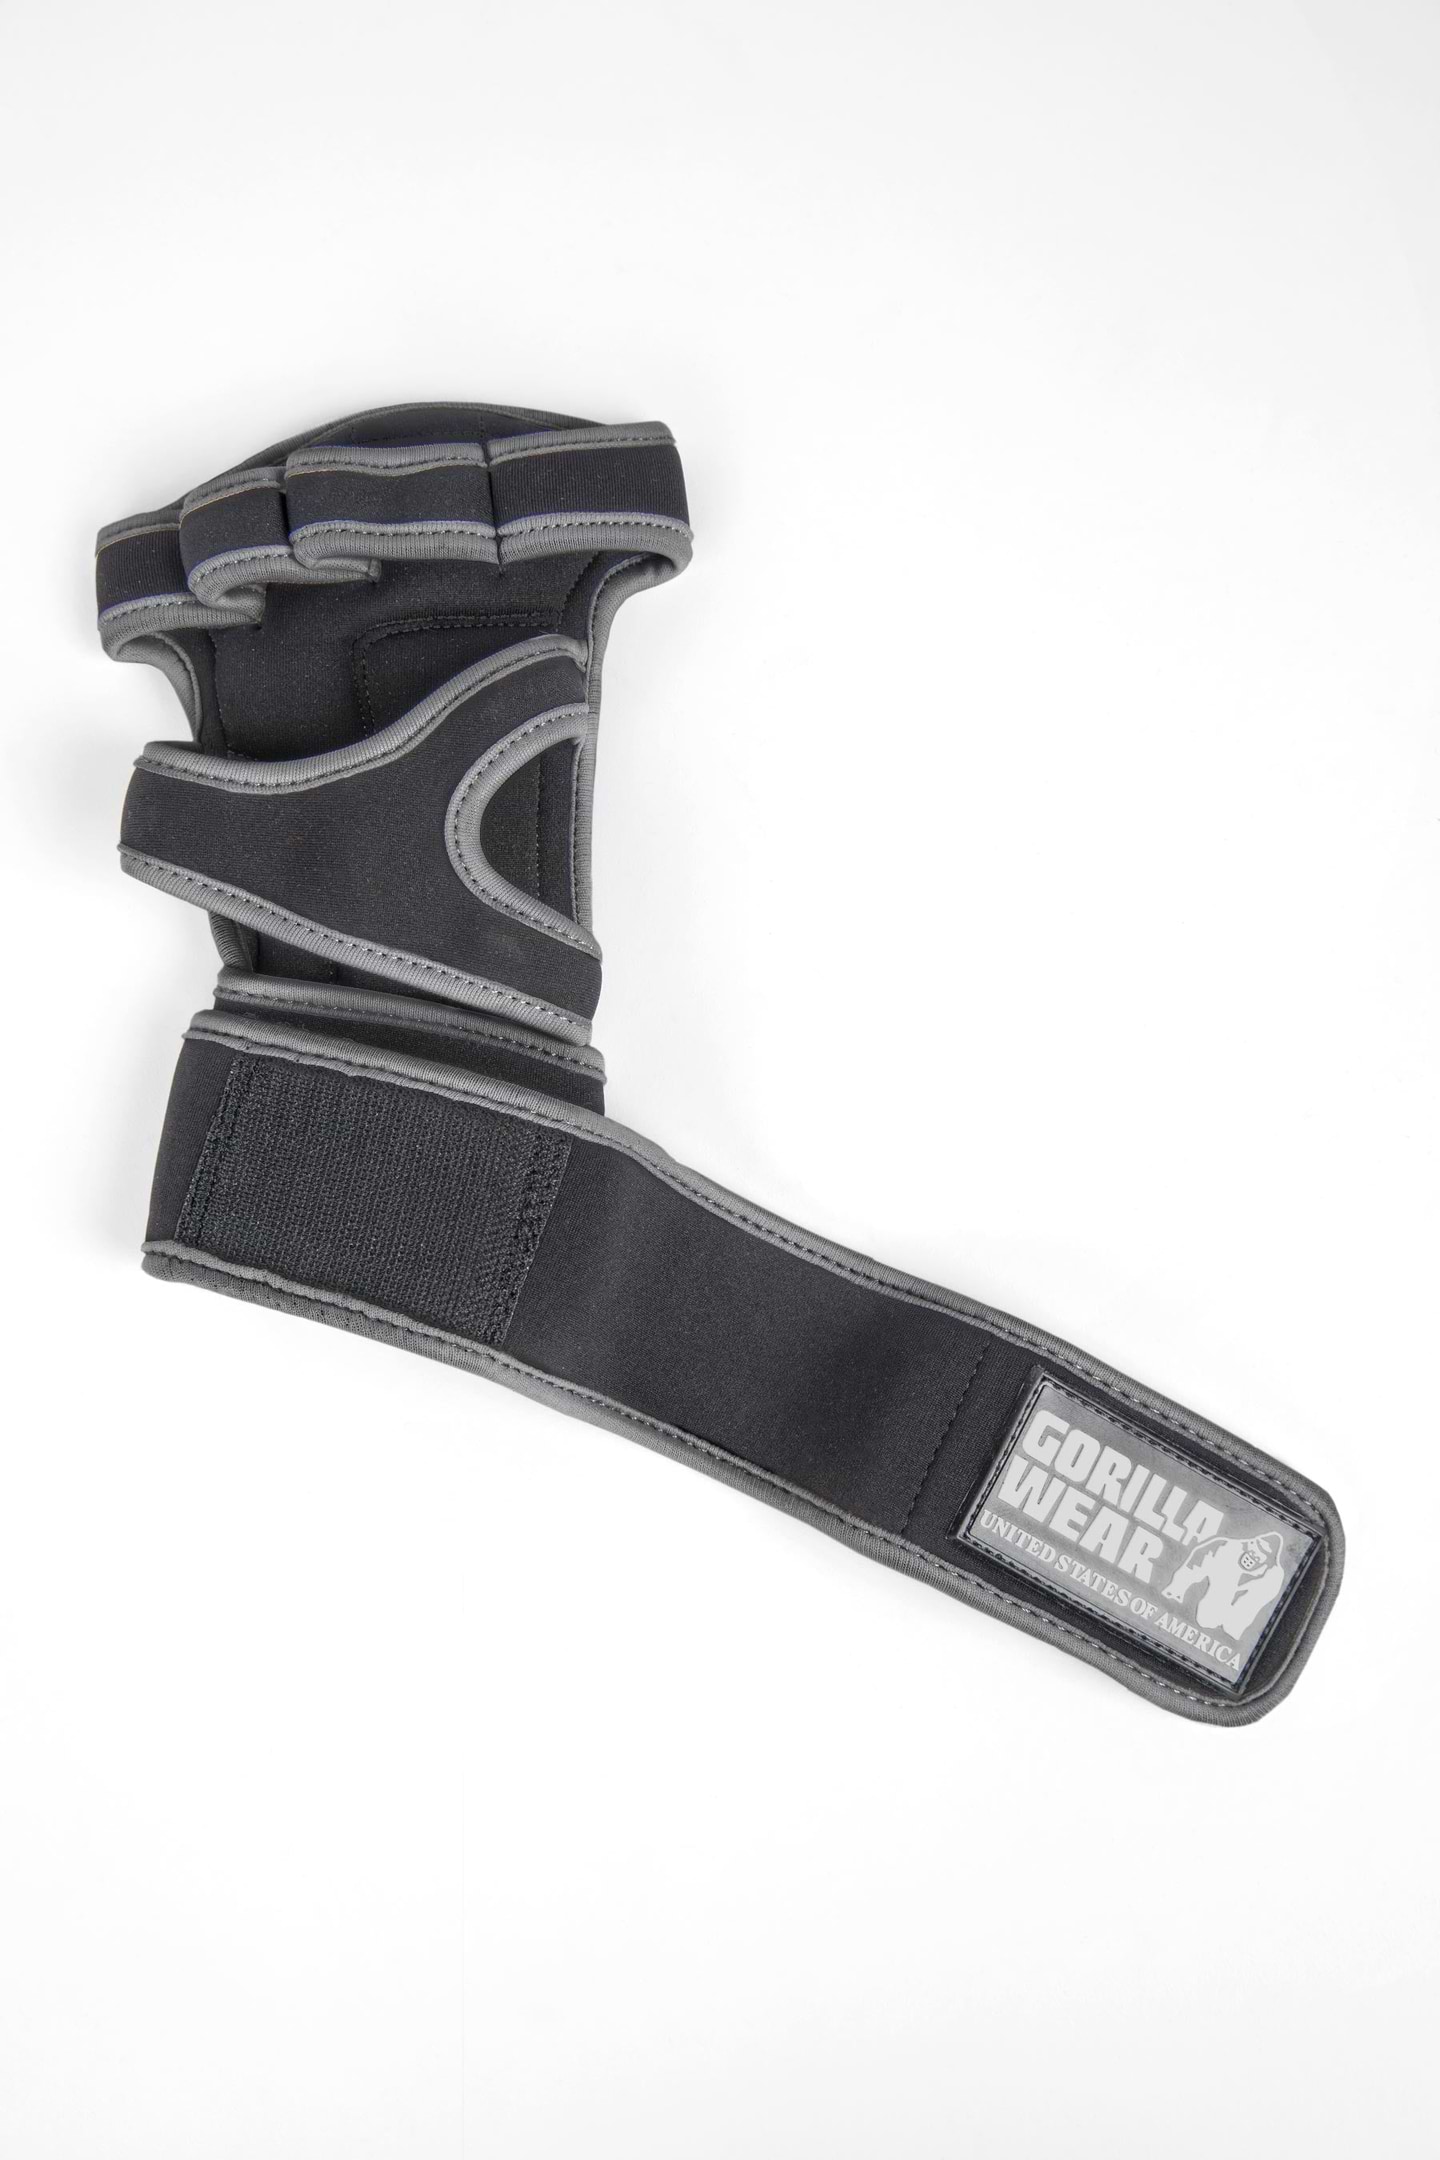 Yuma Weight Lifting Workout Gloves - Black - XL Gorilla Wear